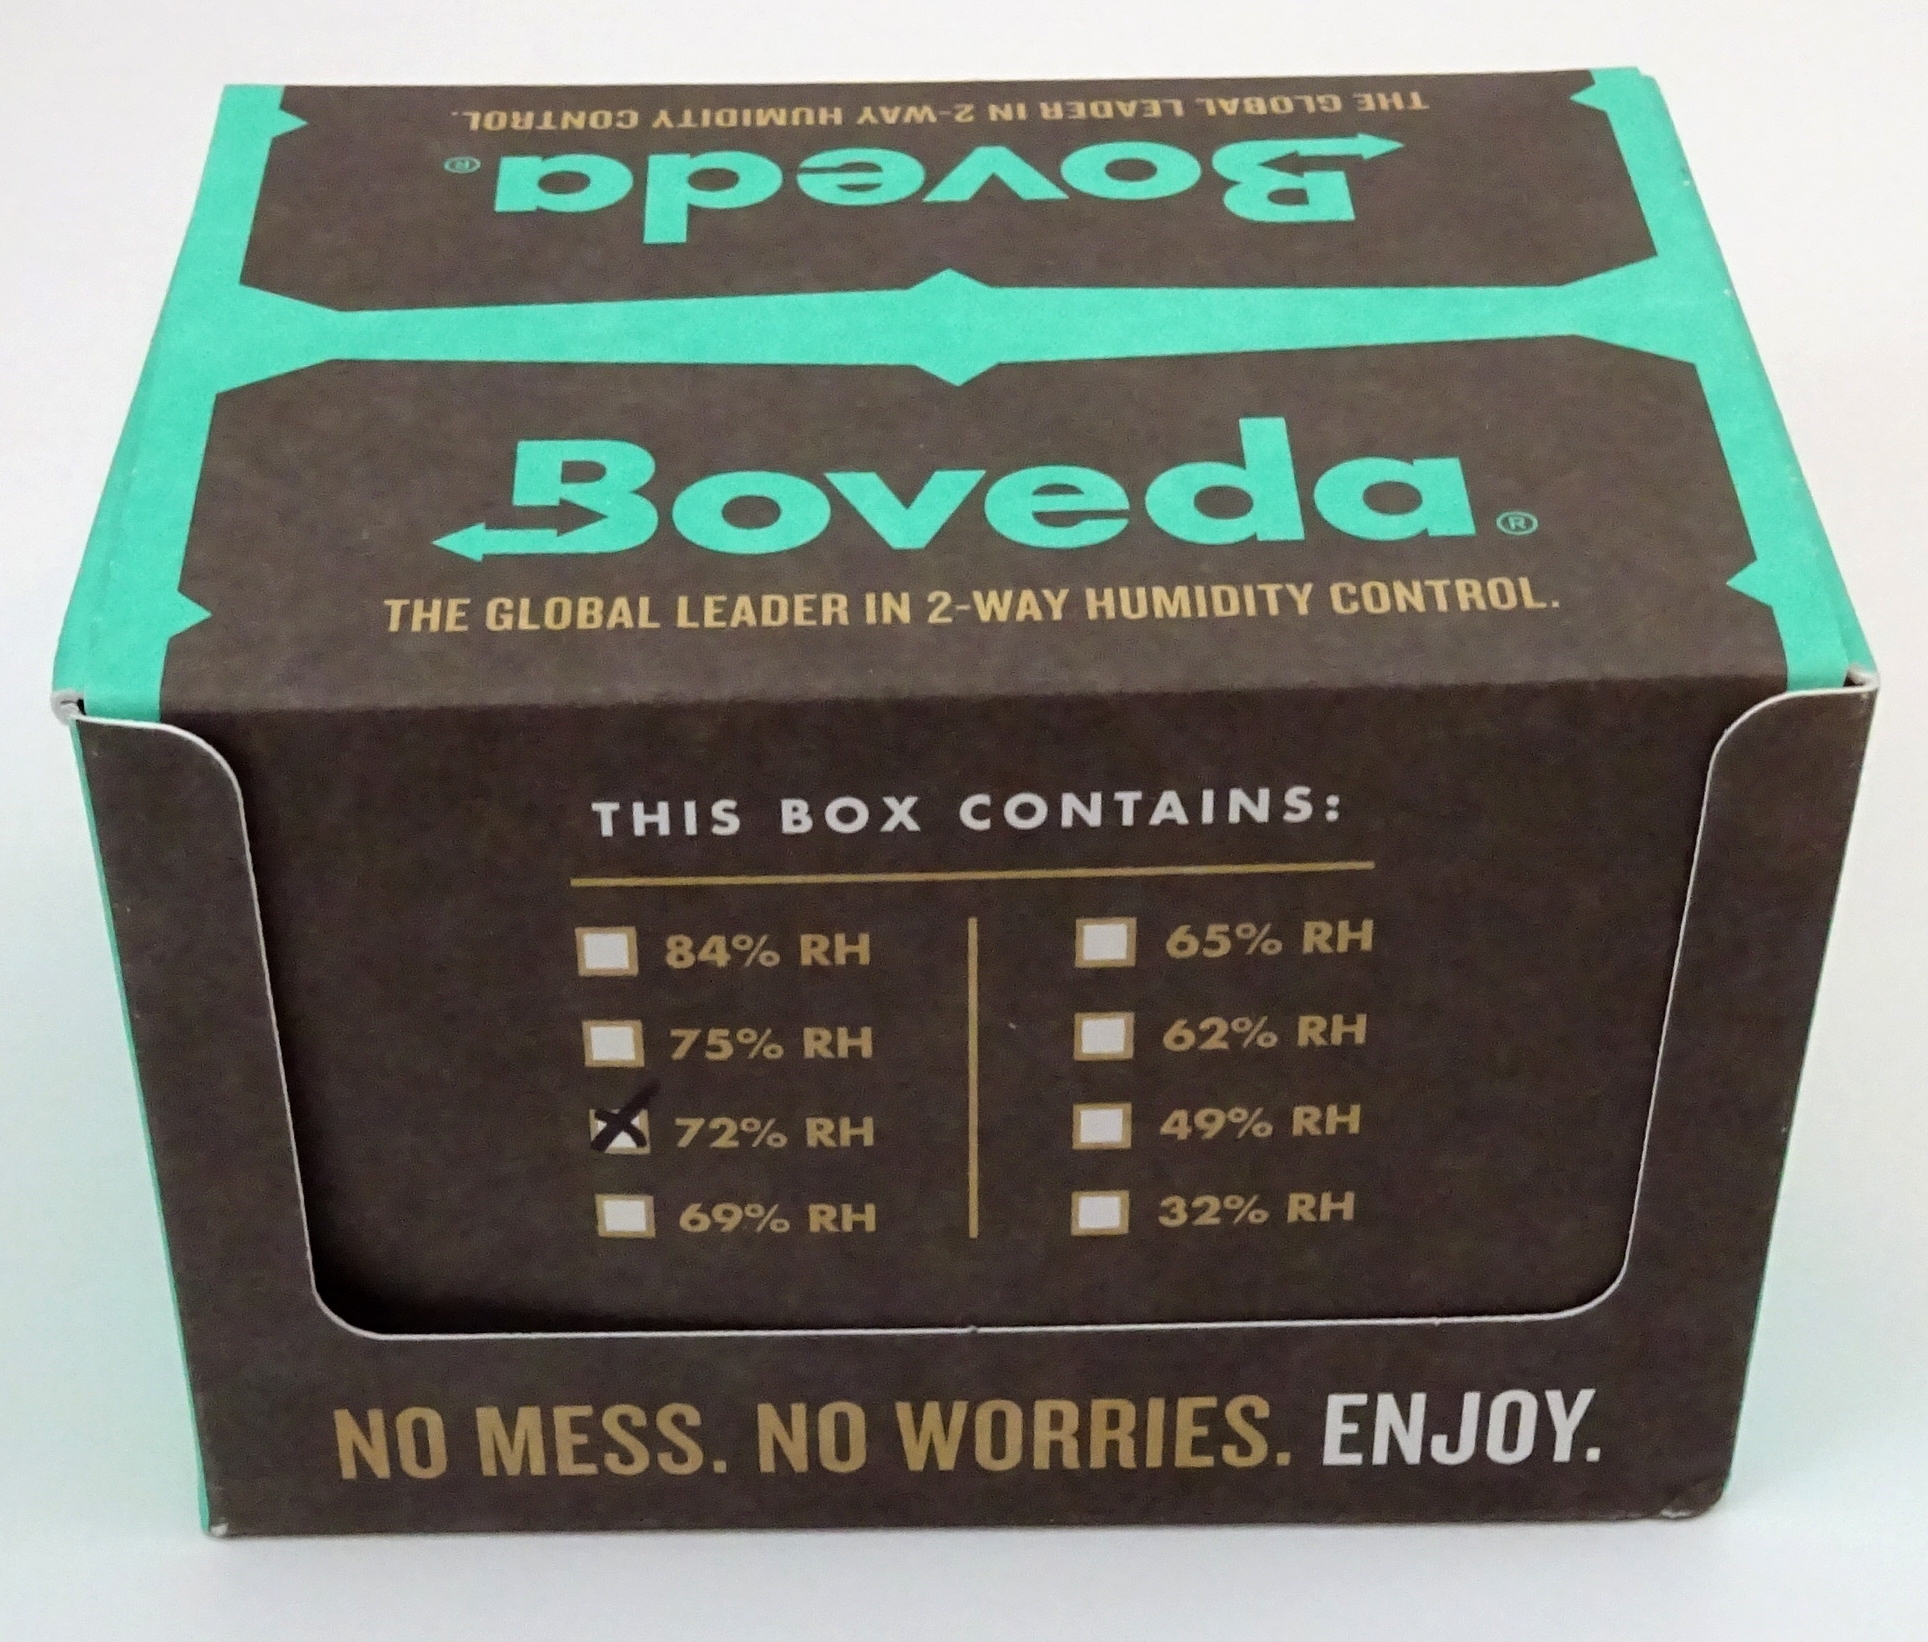 Boveda Humidipak Box - 72% Humidity